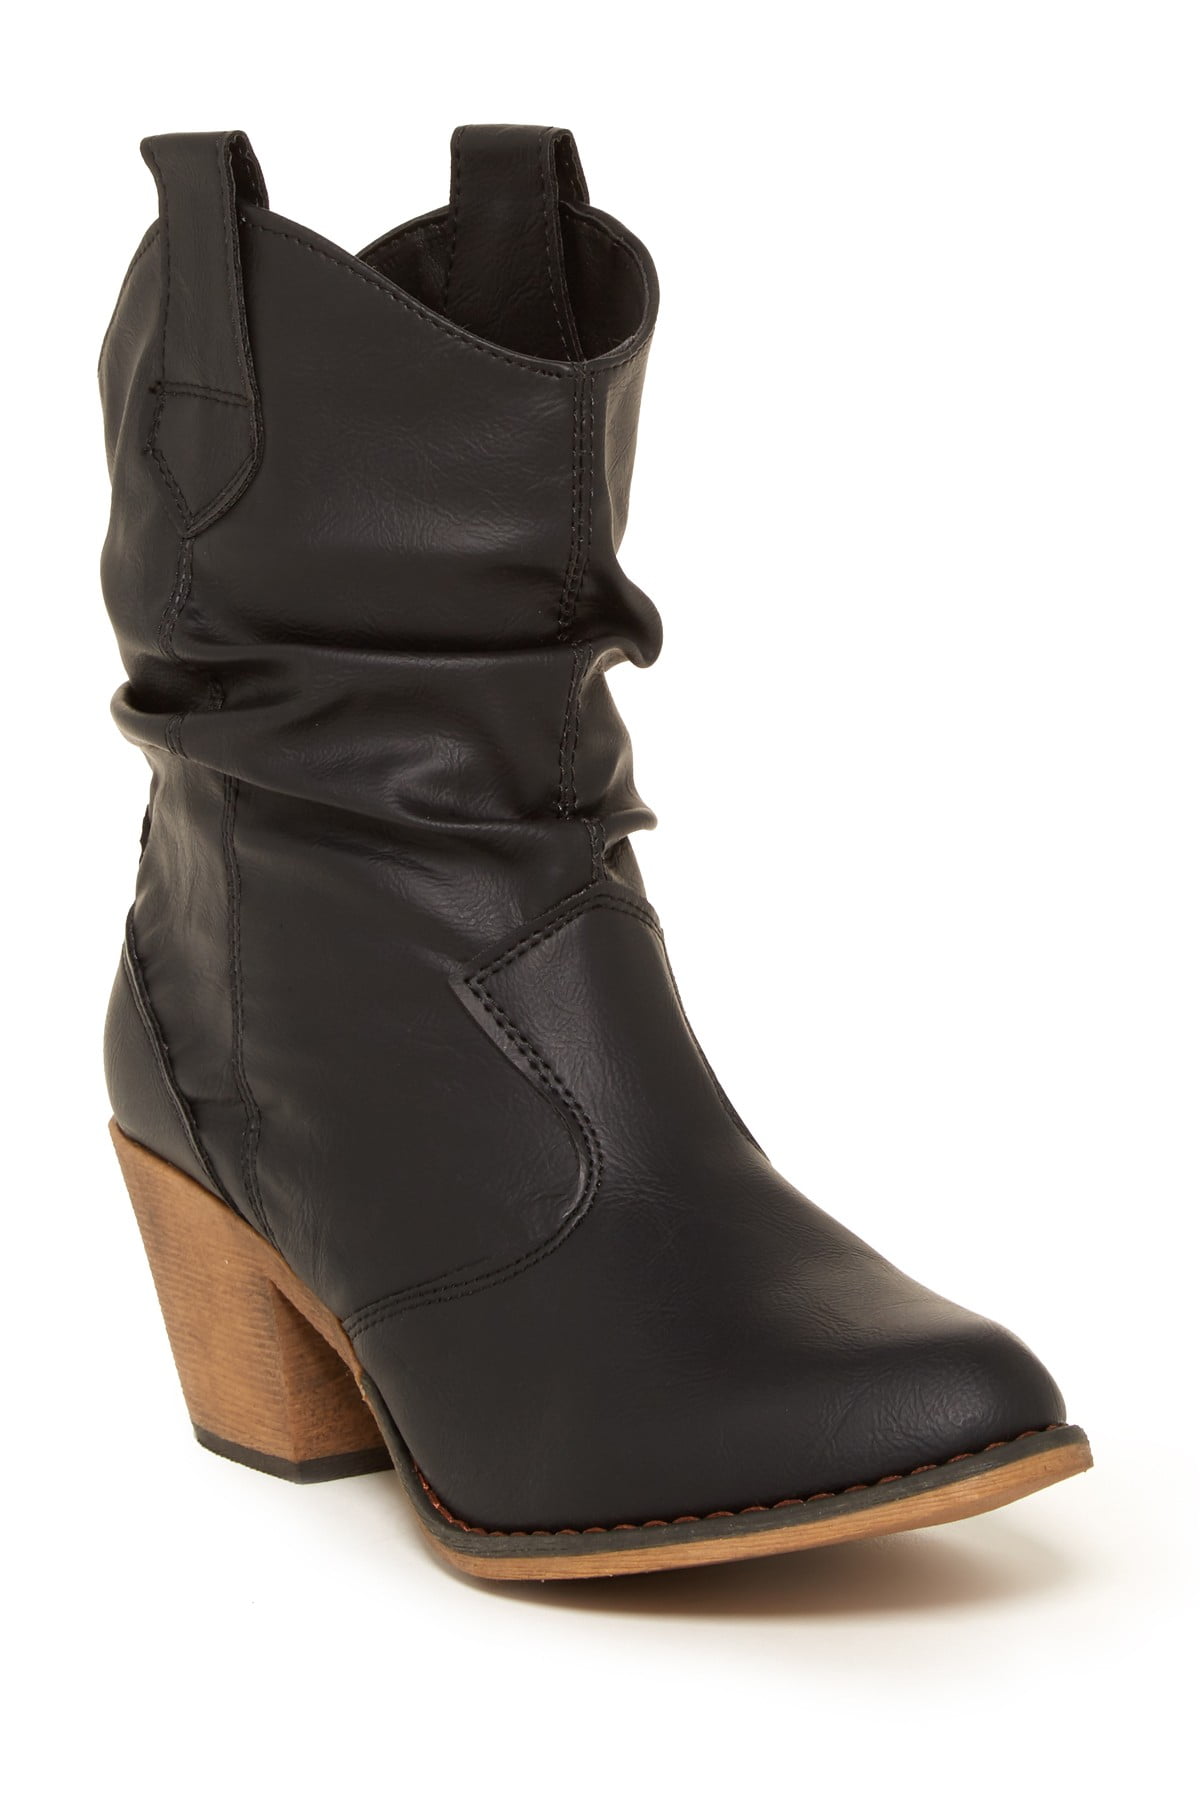 Charles Albert Womens Waterproof Rain Garden Shoe Slip On Low Boot-Comfortable-Ankle Boots